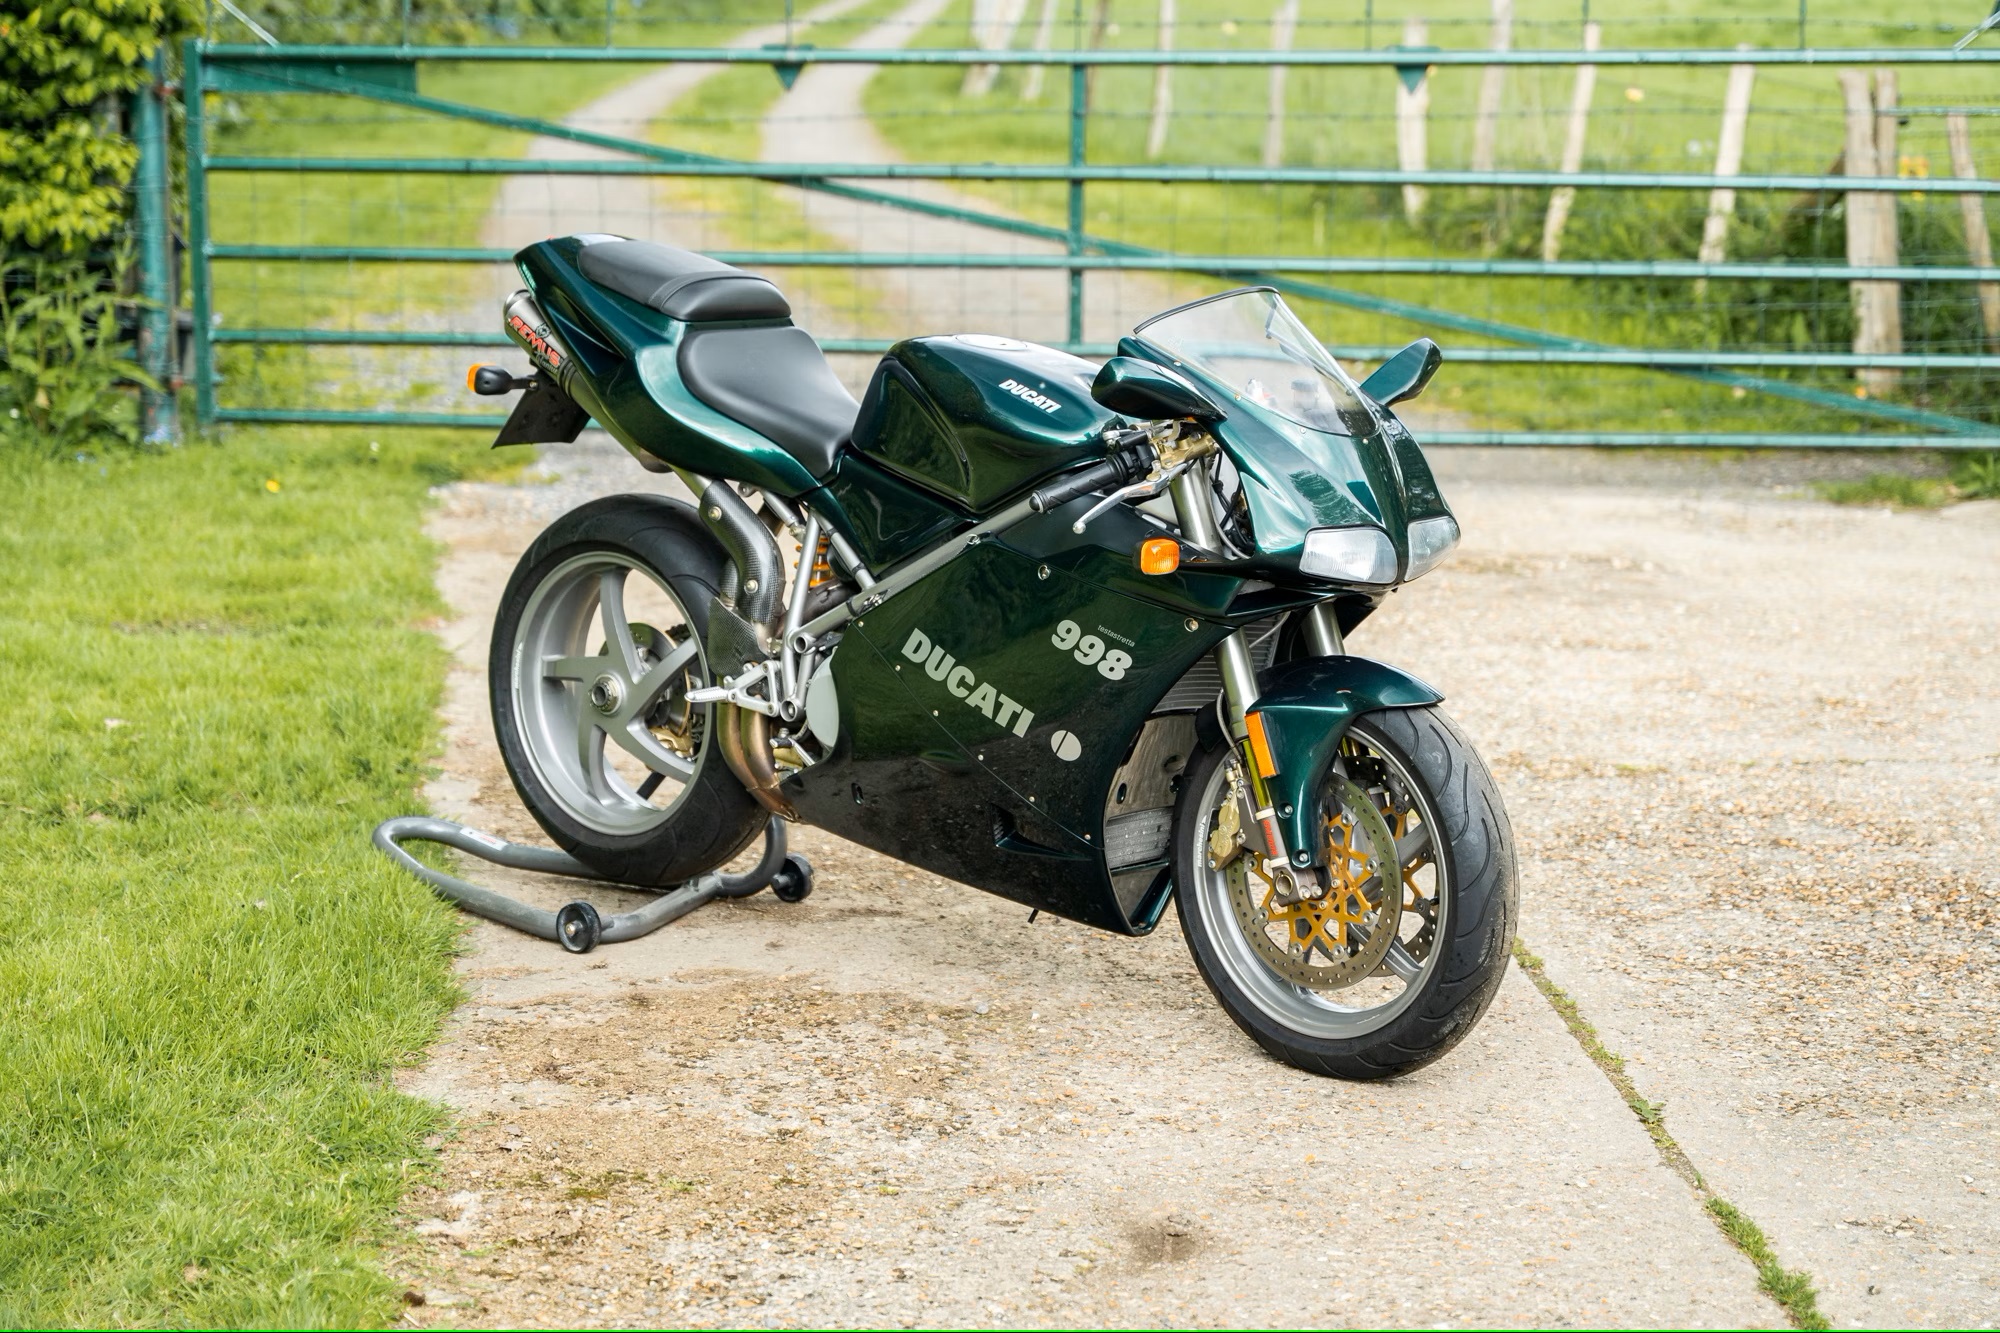 2004 Ducati 998 'Matrix'